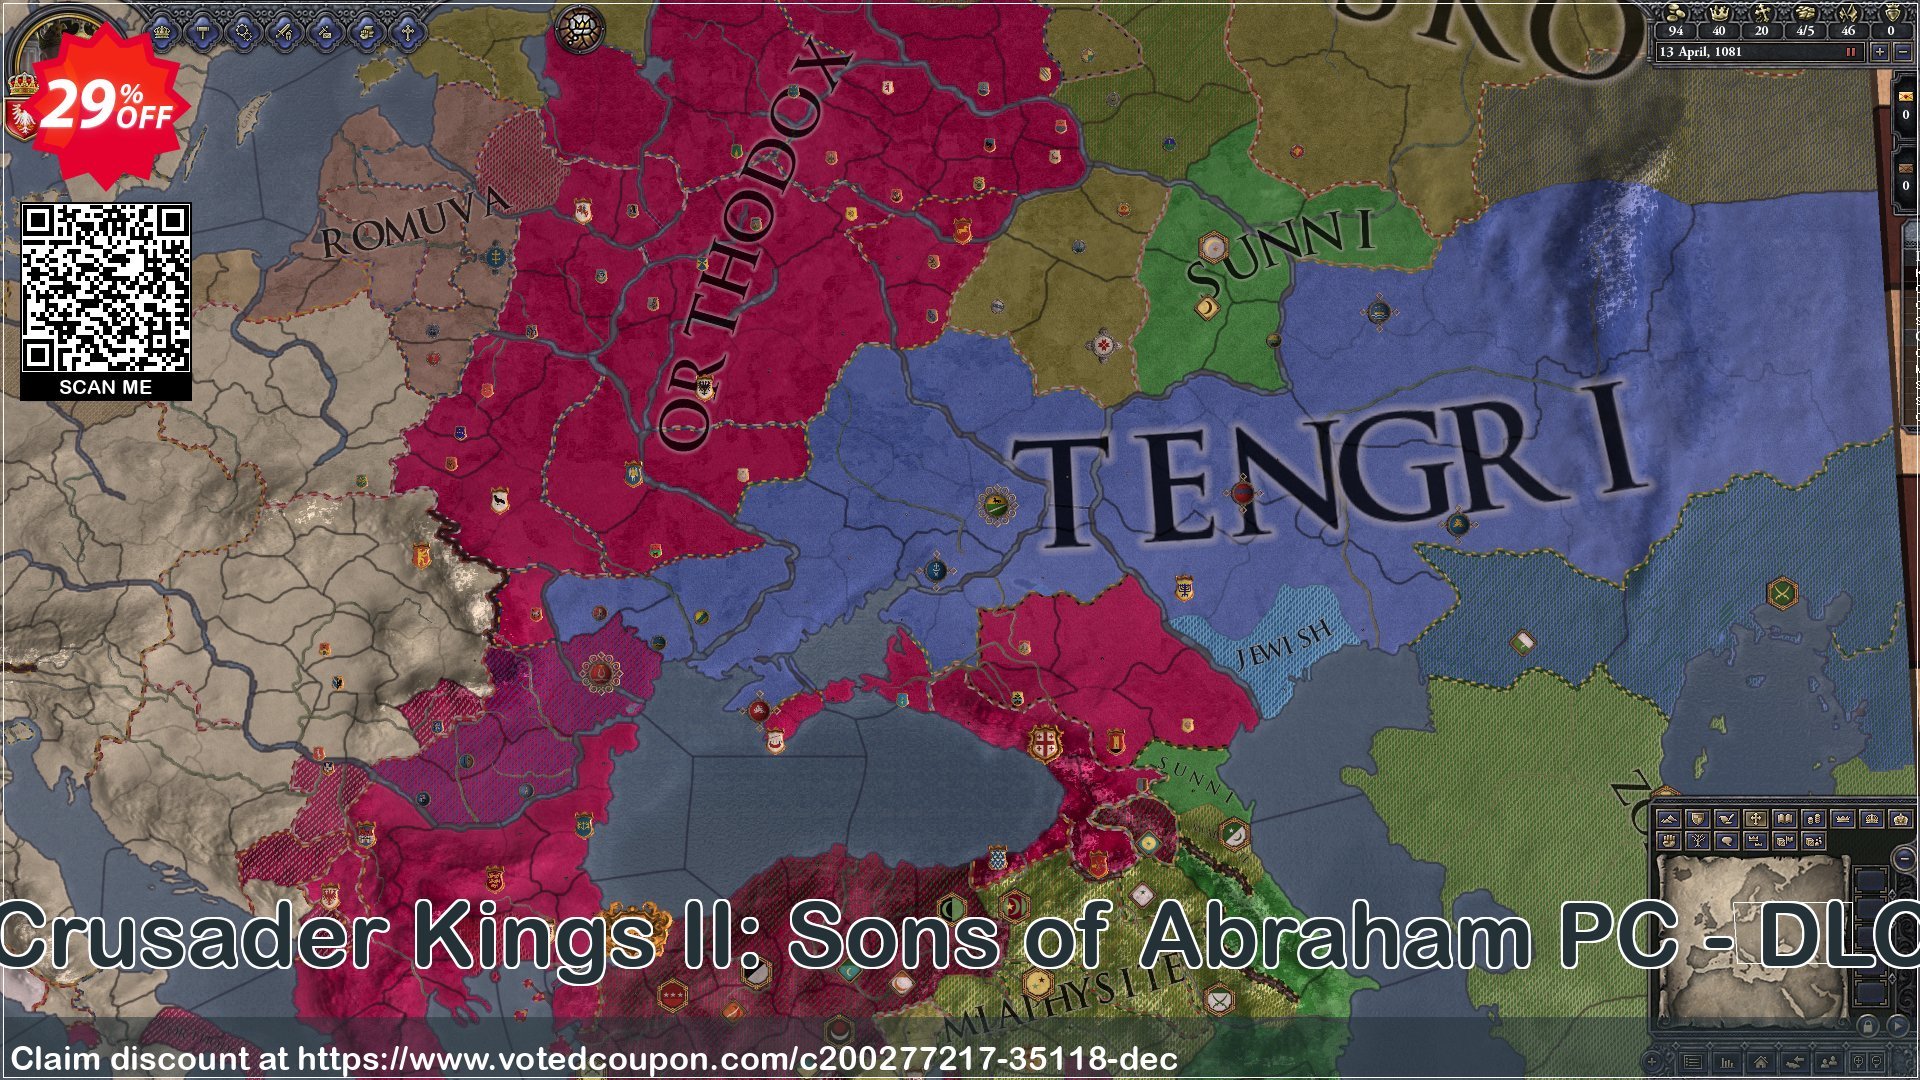 Crusader Kings II: Sons of Abraham PC - DLC Coupon Code Jun 2024, 29% OFF - VotedCoupon